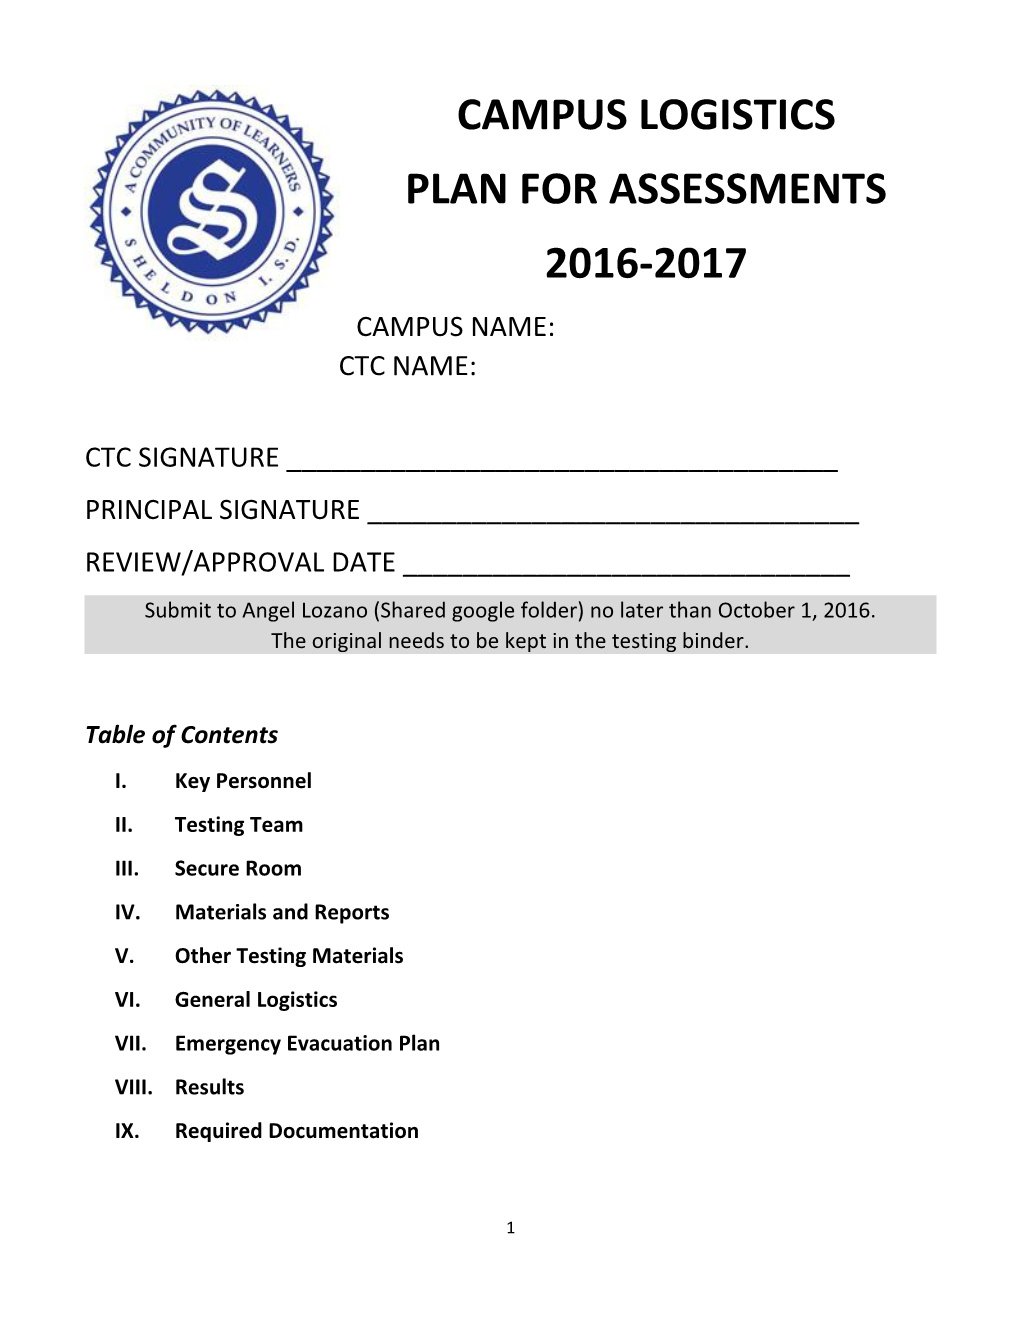 Plan for Assessments